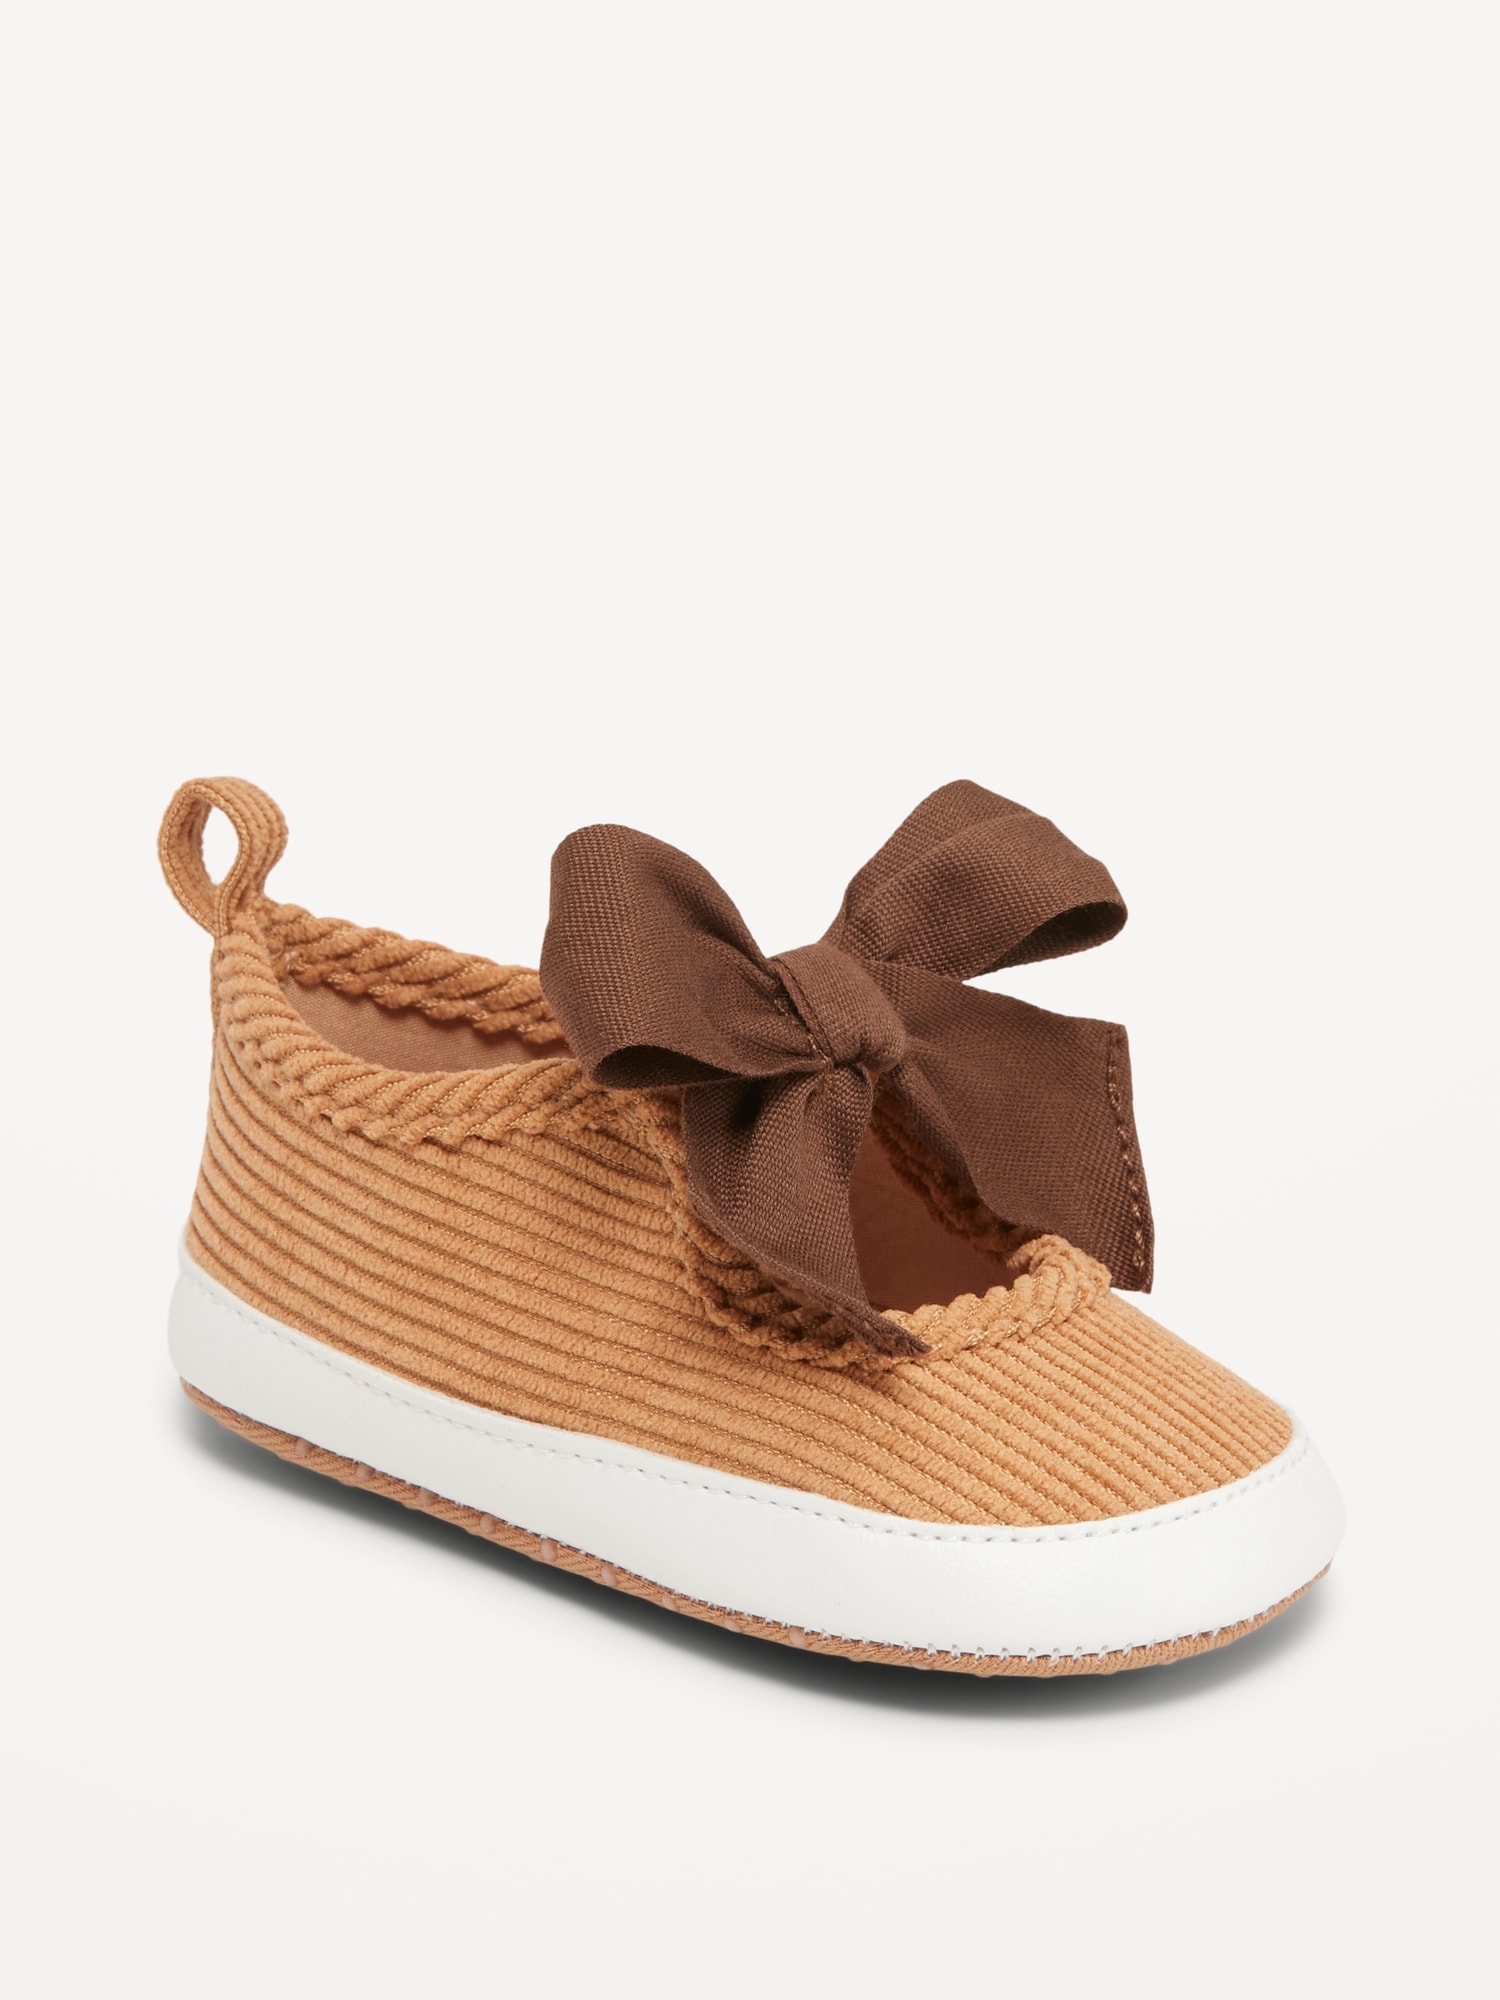 Oldnavy Corduroy Bow-Tie Sneakers for Baby